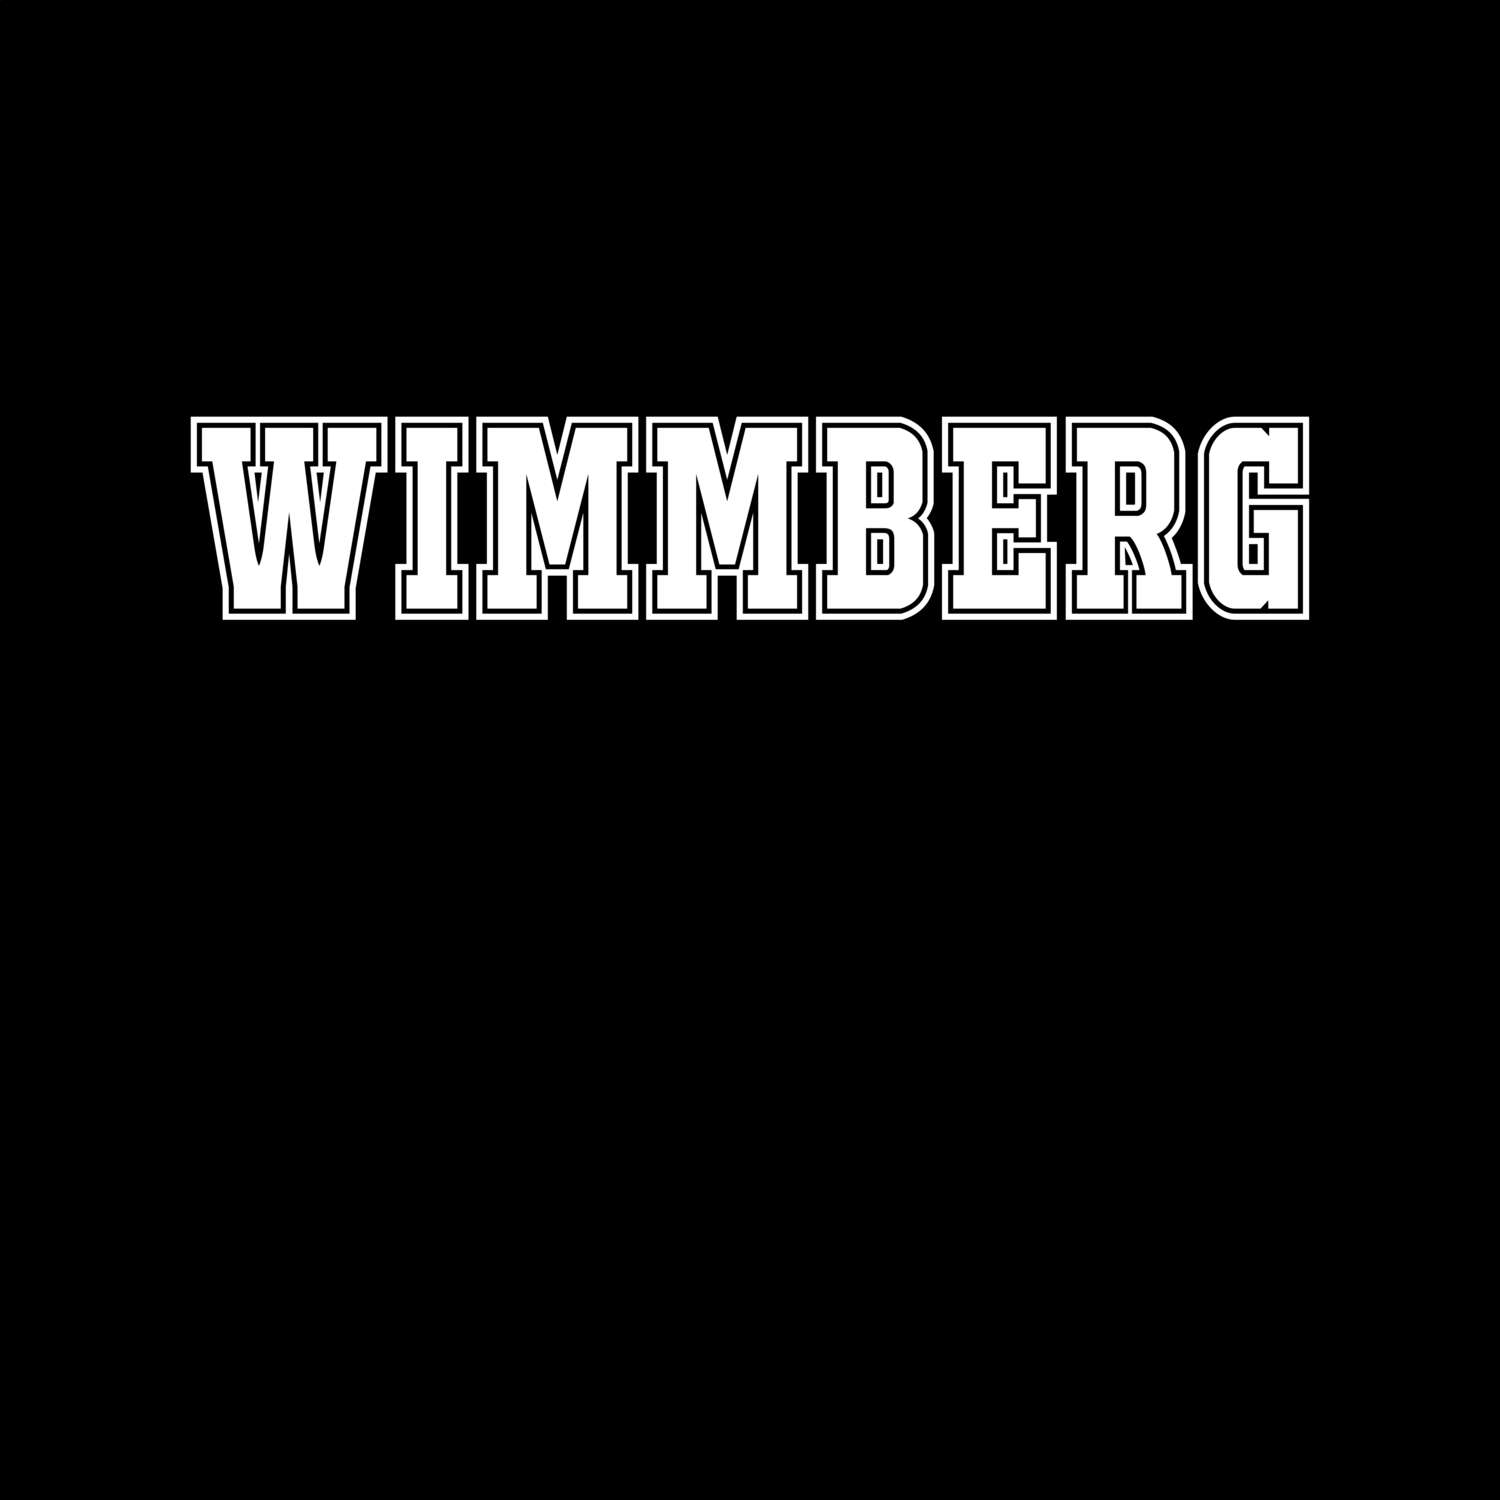 Wimmberg T-Shirt »Classic«